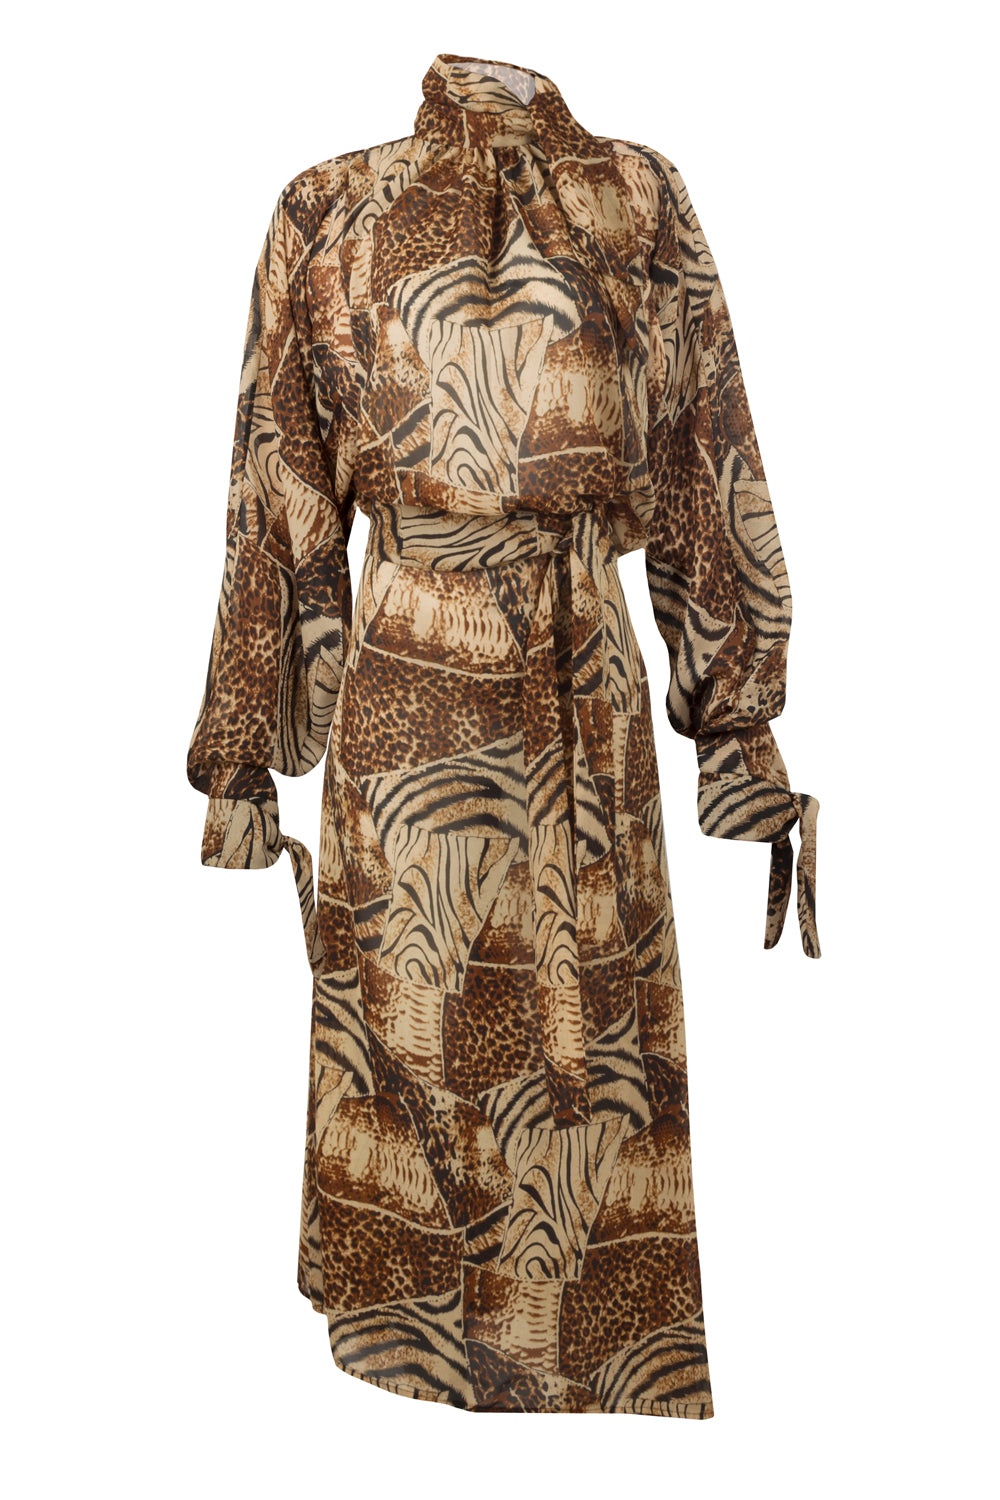 SAMPLE Tiger Dress